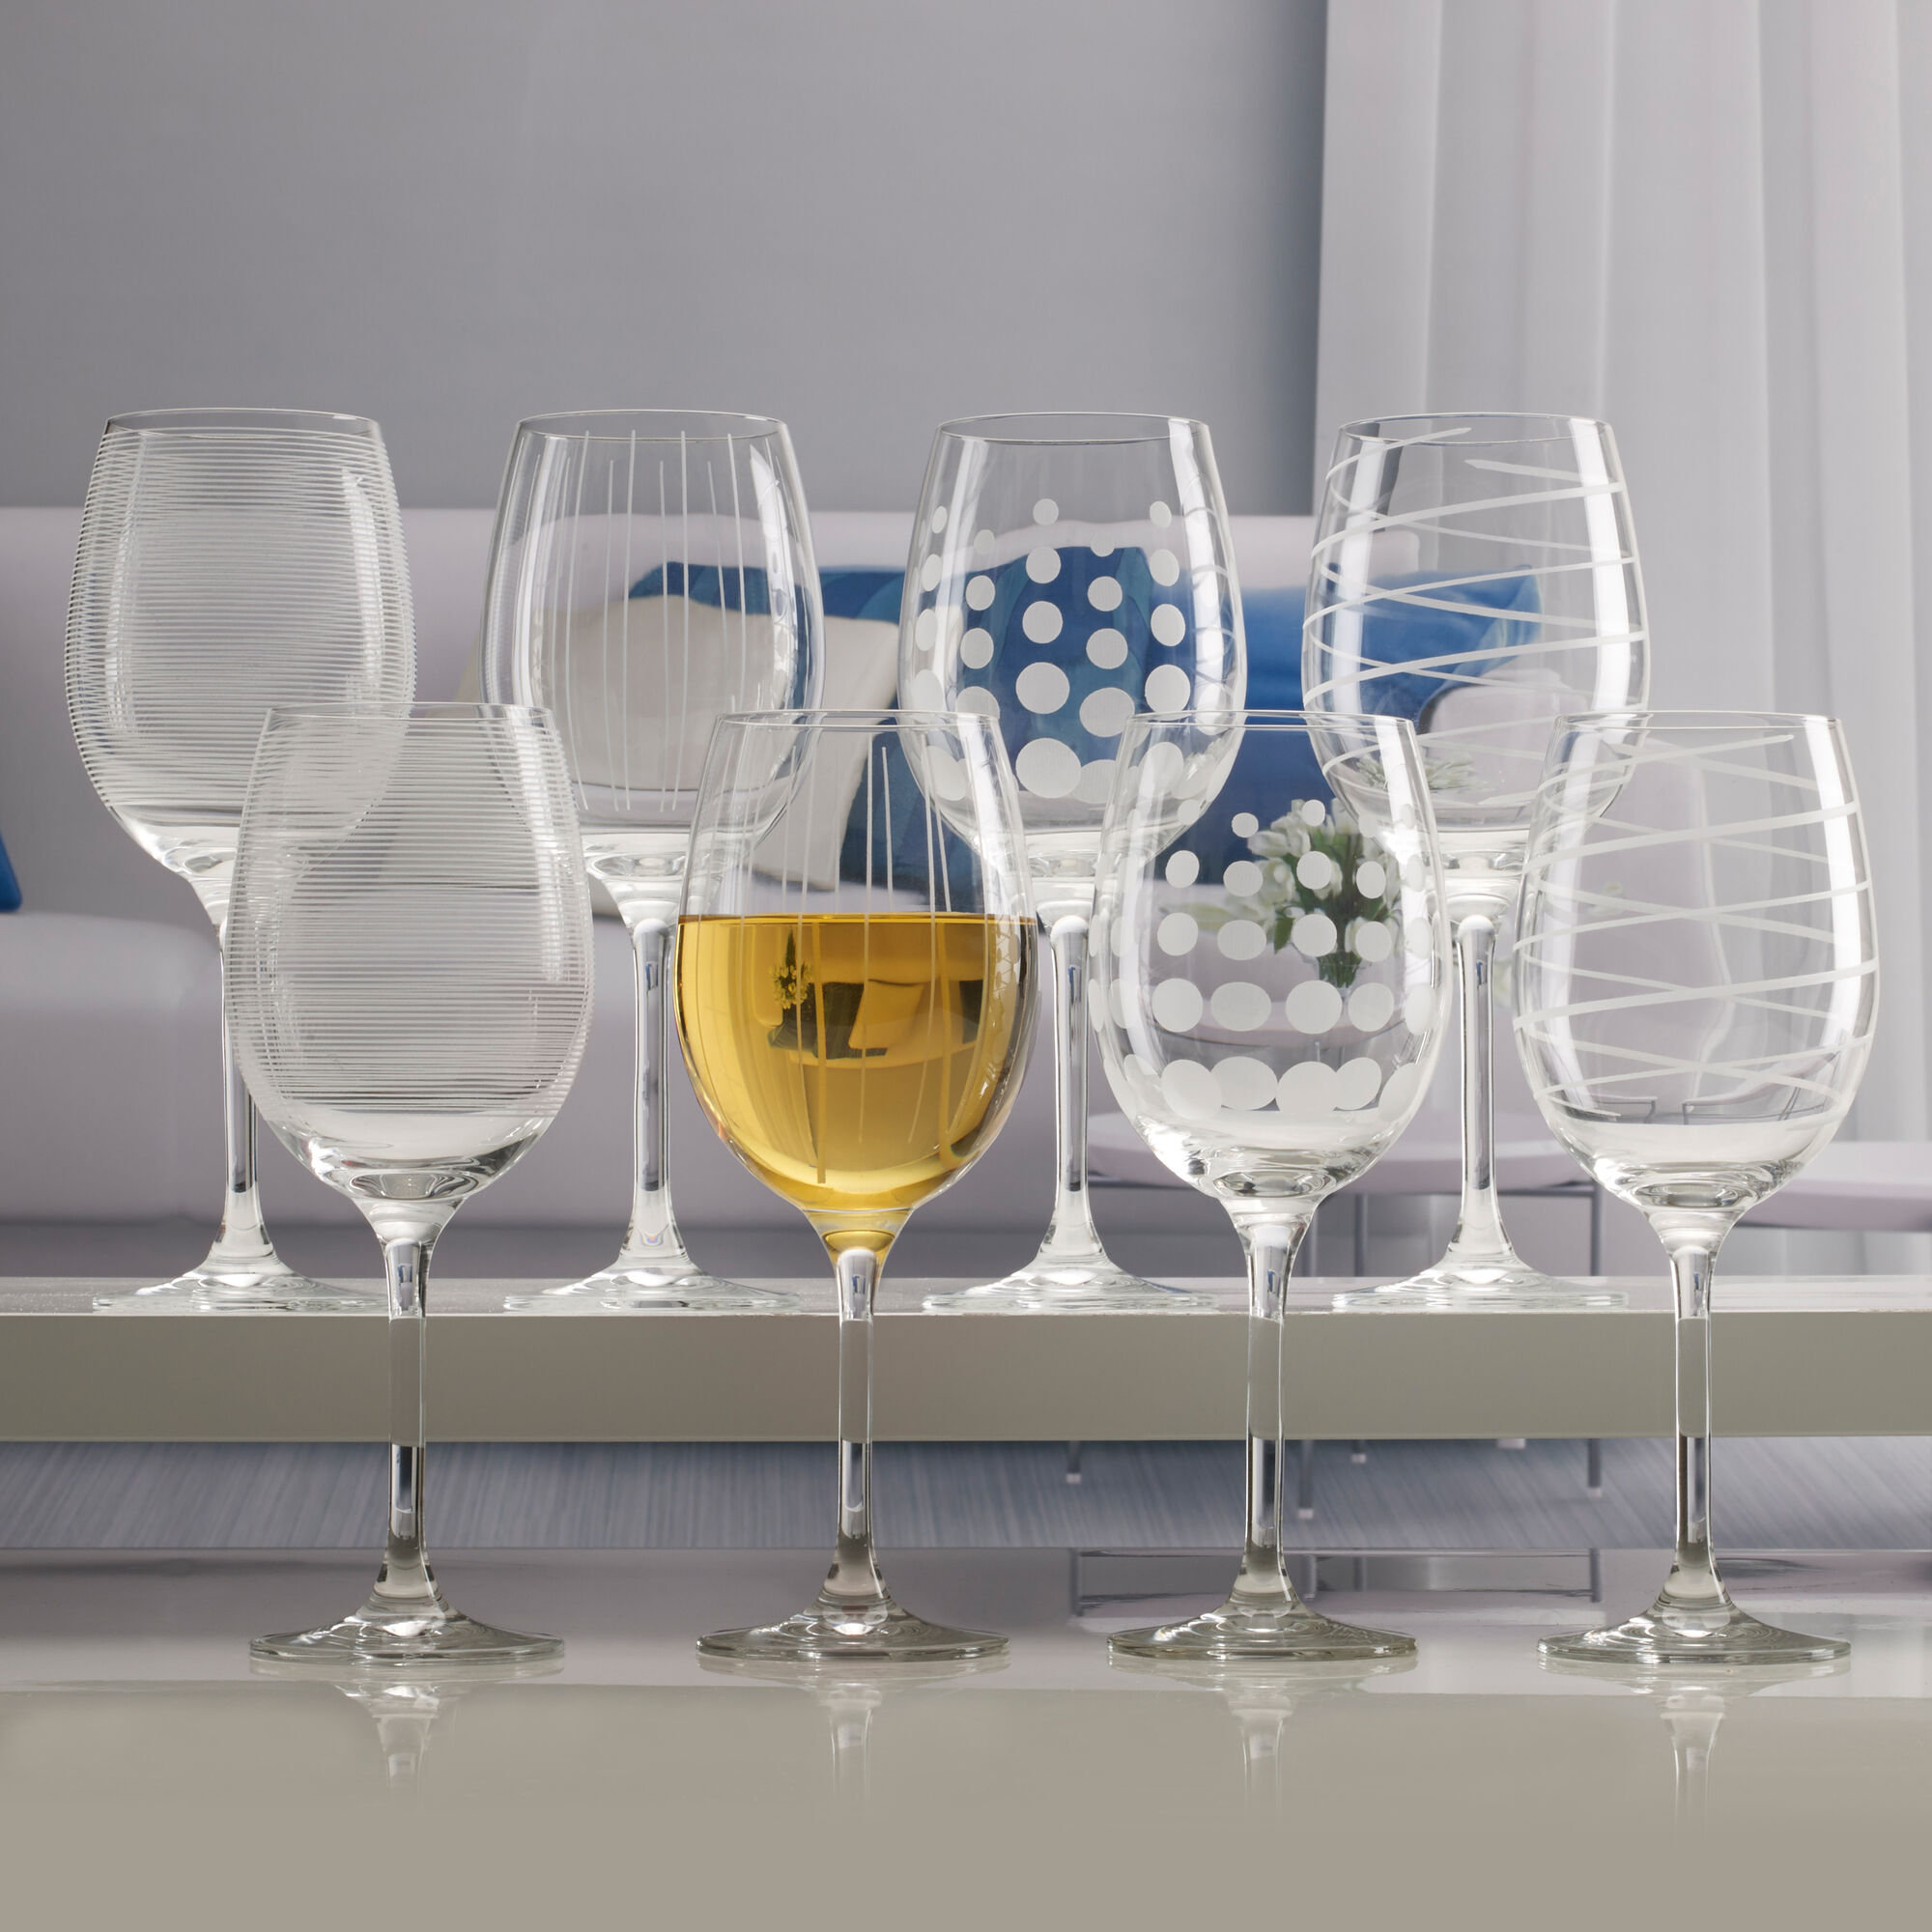 Mikasa Cheers Red Wine Glasses, Set of 4